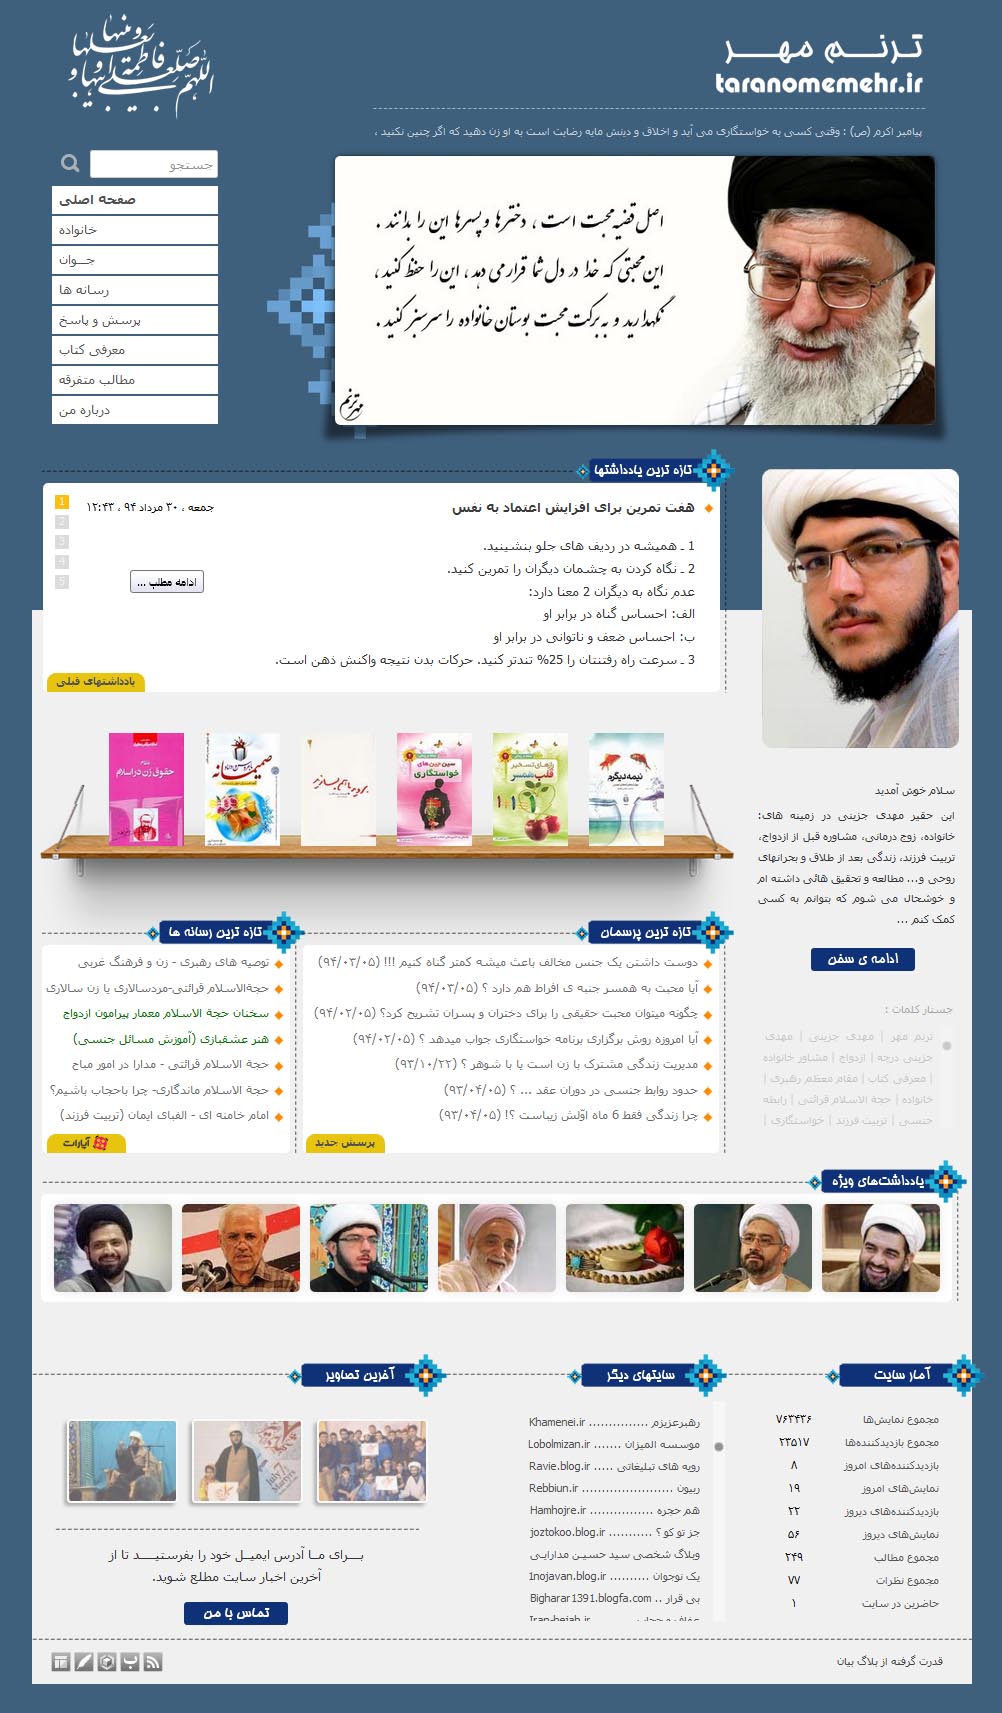 وبسایت گروه فرهنگی ترنم مهر